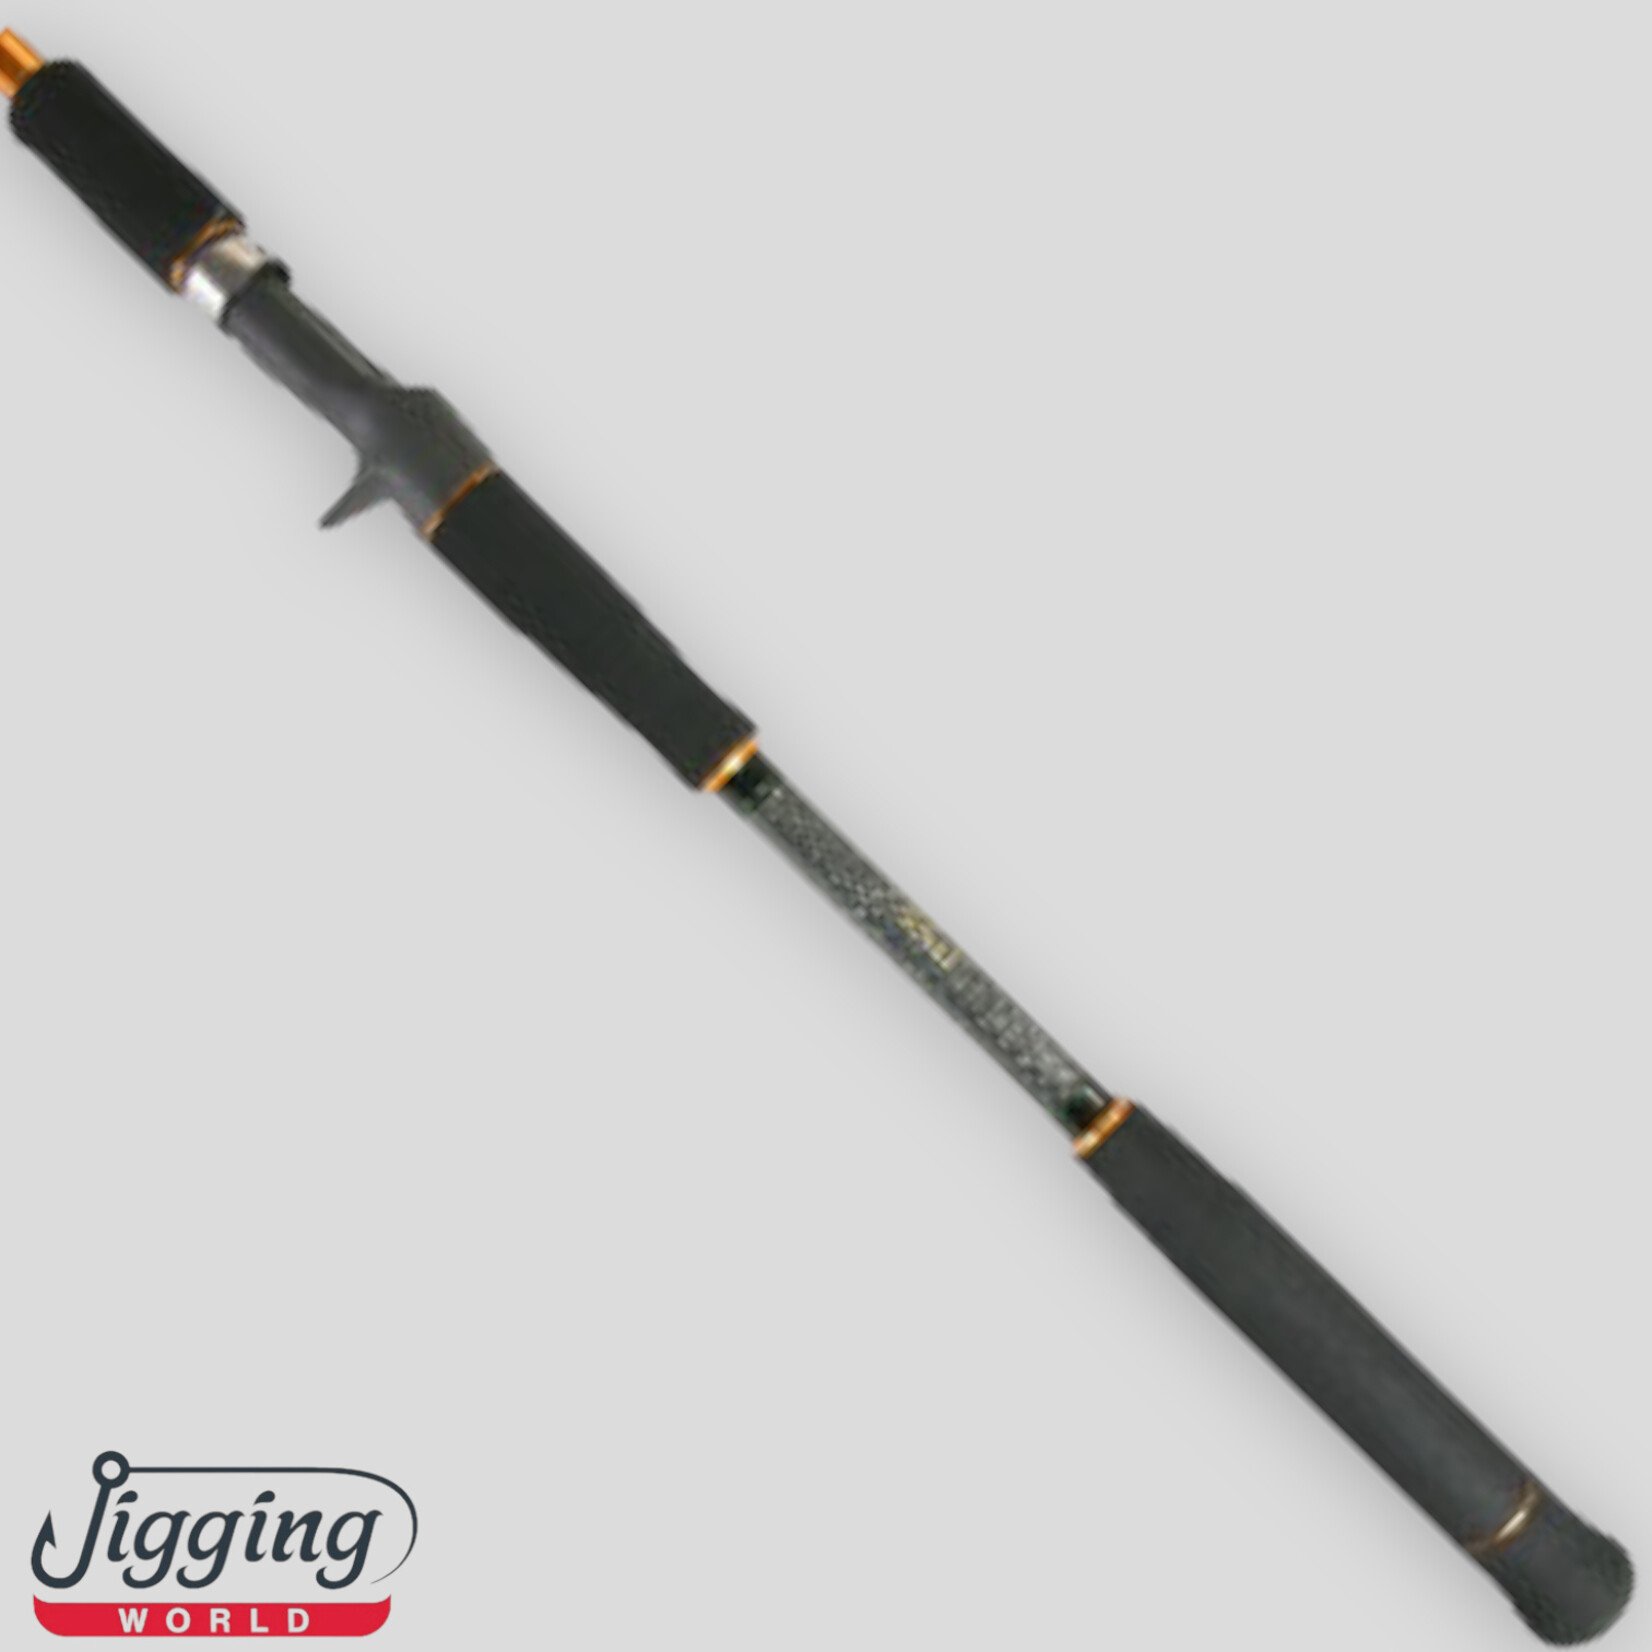 https://cdn.shoplightspeed.com/shops/665849/files/59831935/1652x1652x2/jigging-world-jigging-world-shogun-casting-rod.jpg